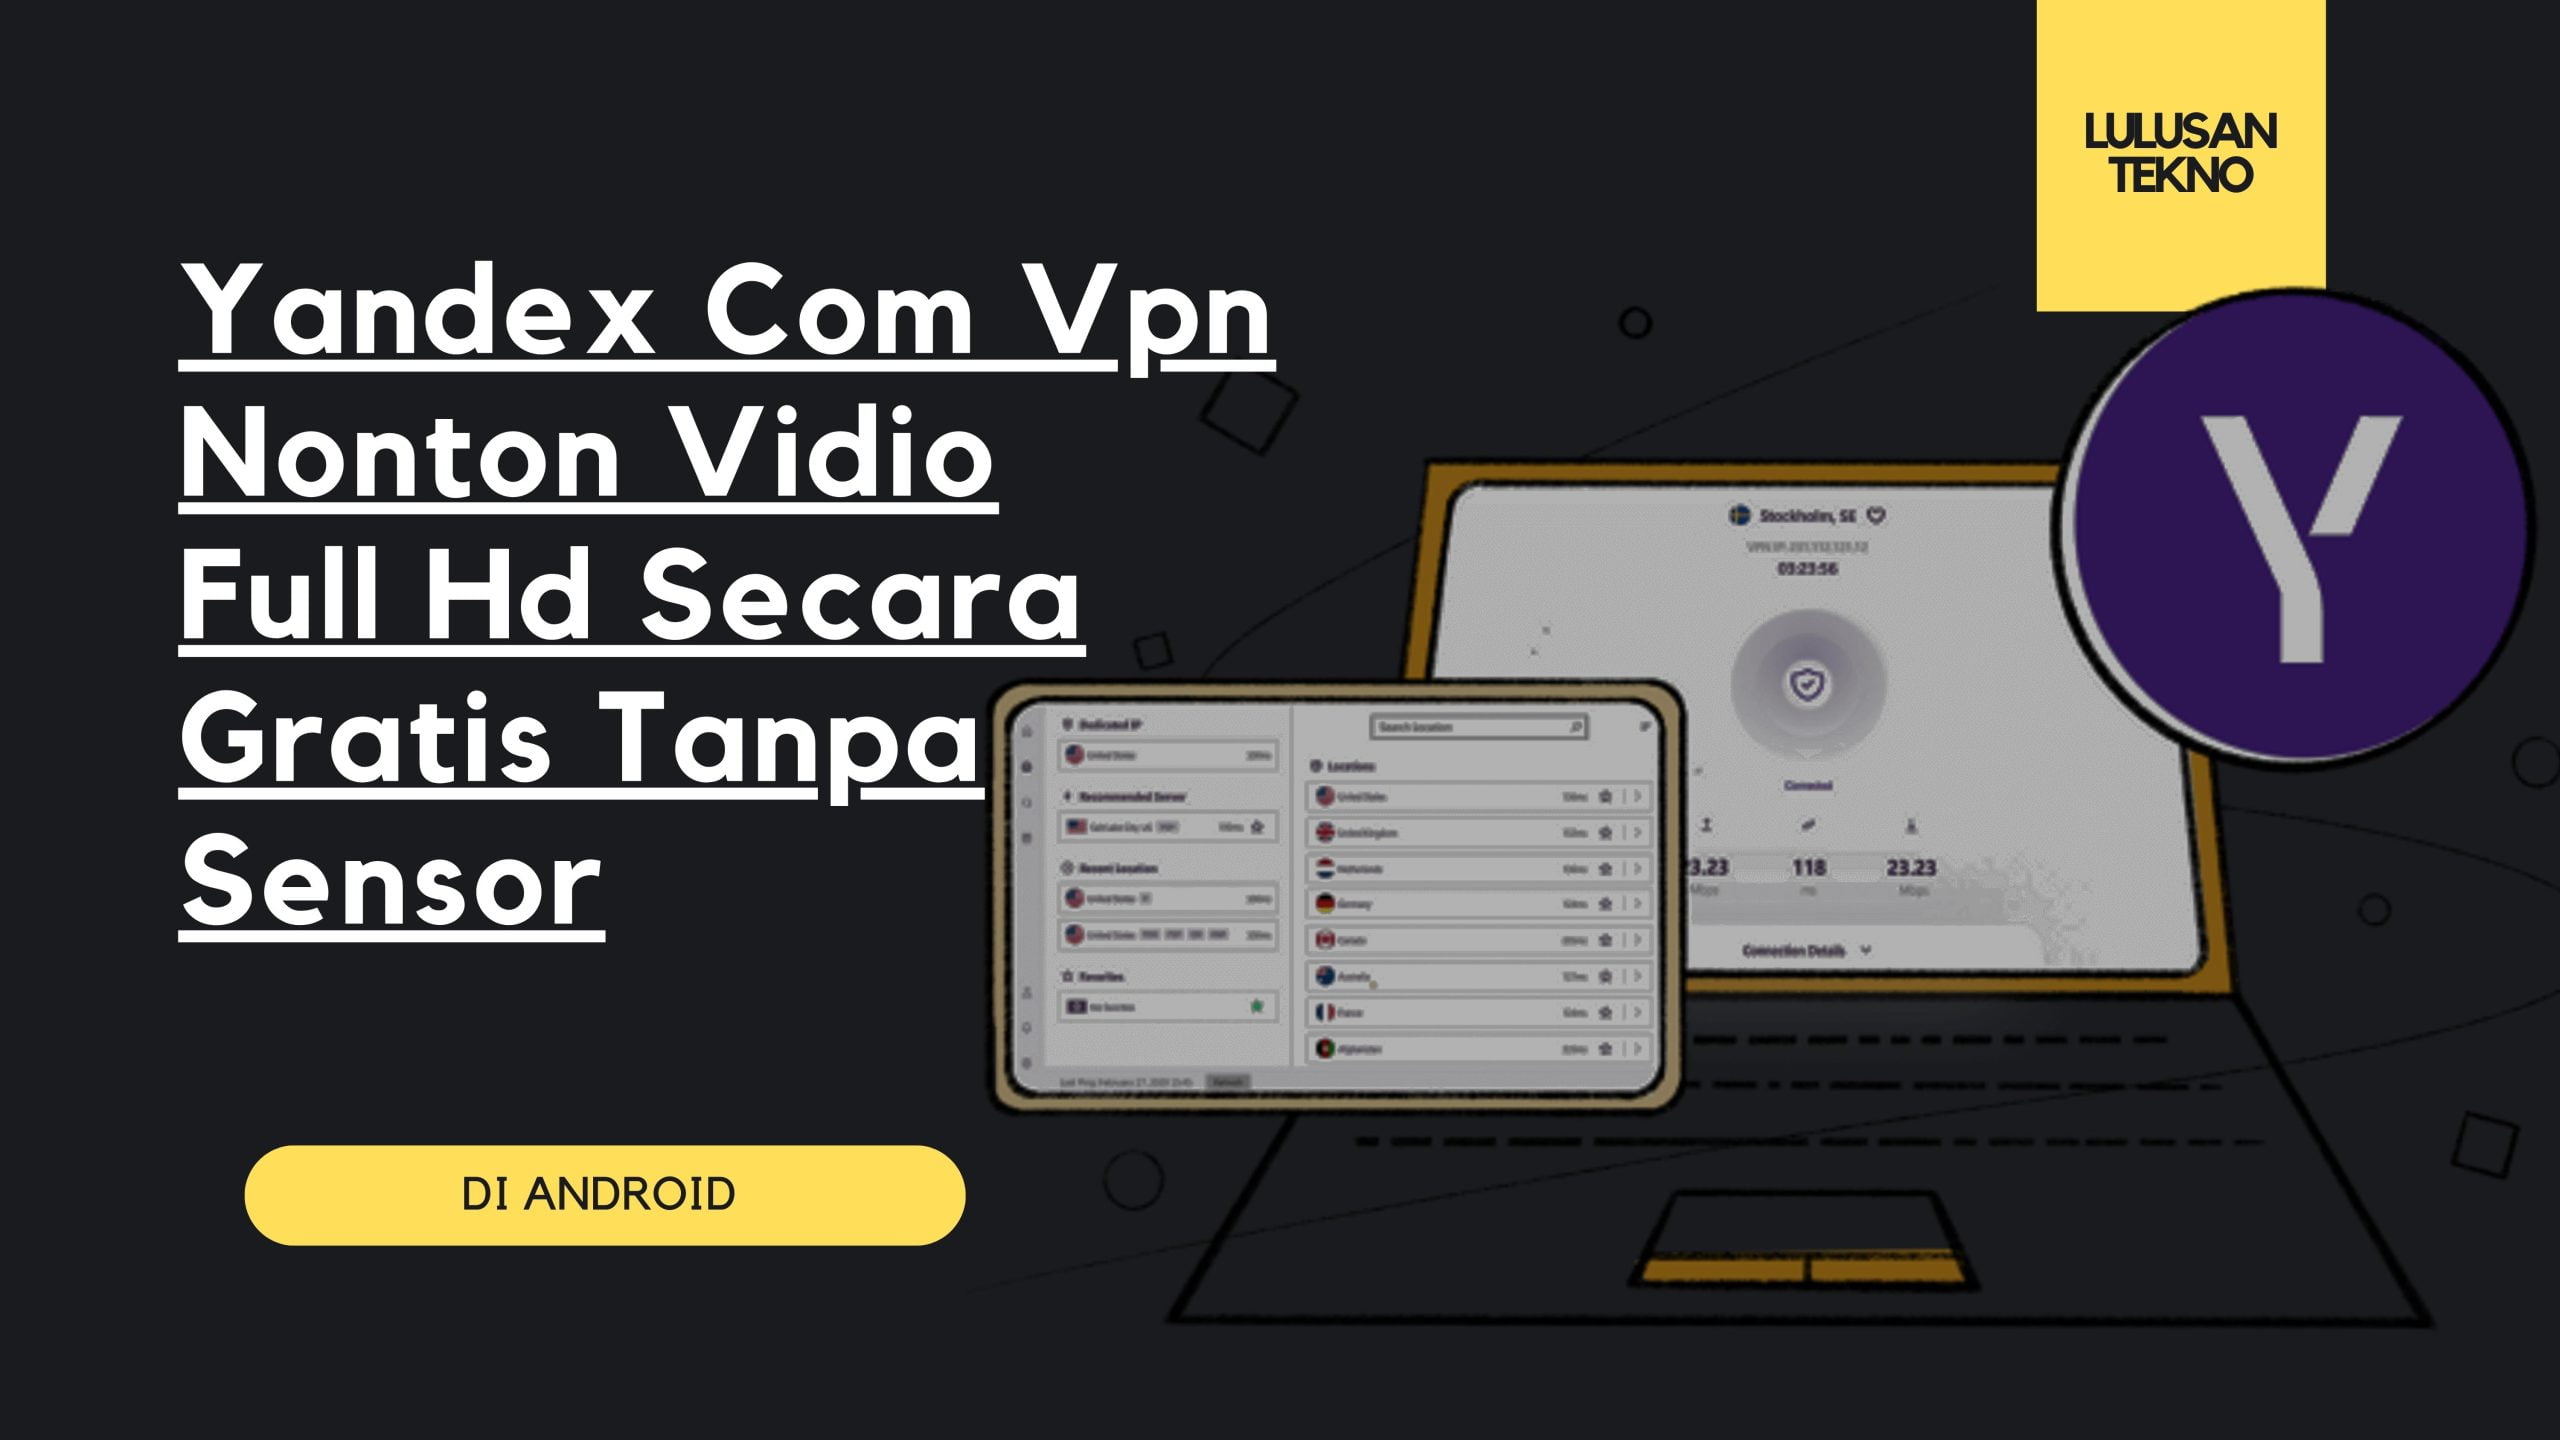 Yandex Com Vpn Nonton Vidio Full Hd Secara Gratis Tanpa Sensor